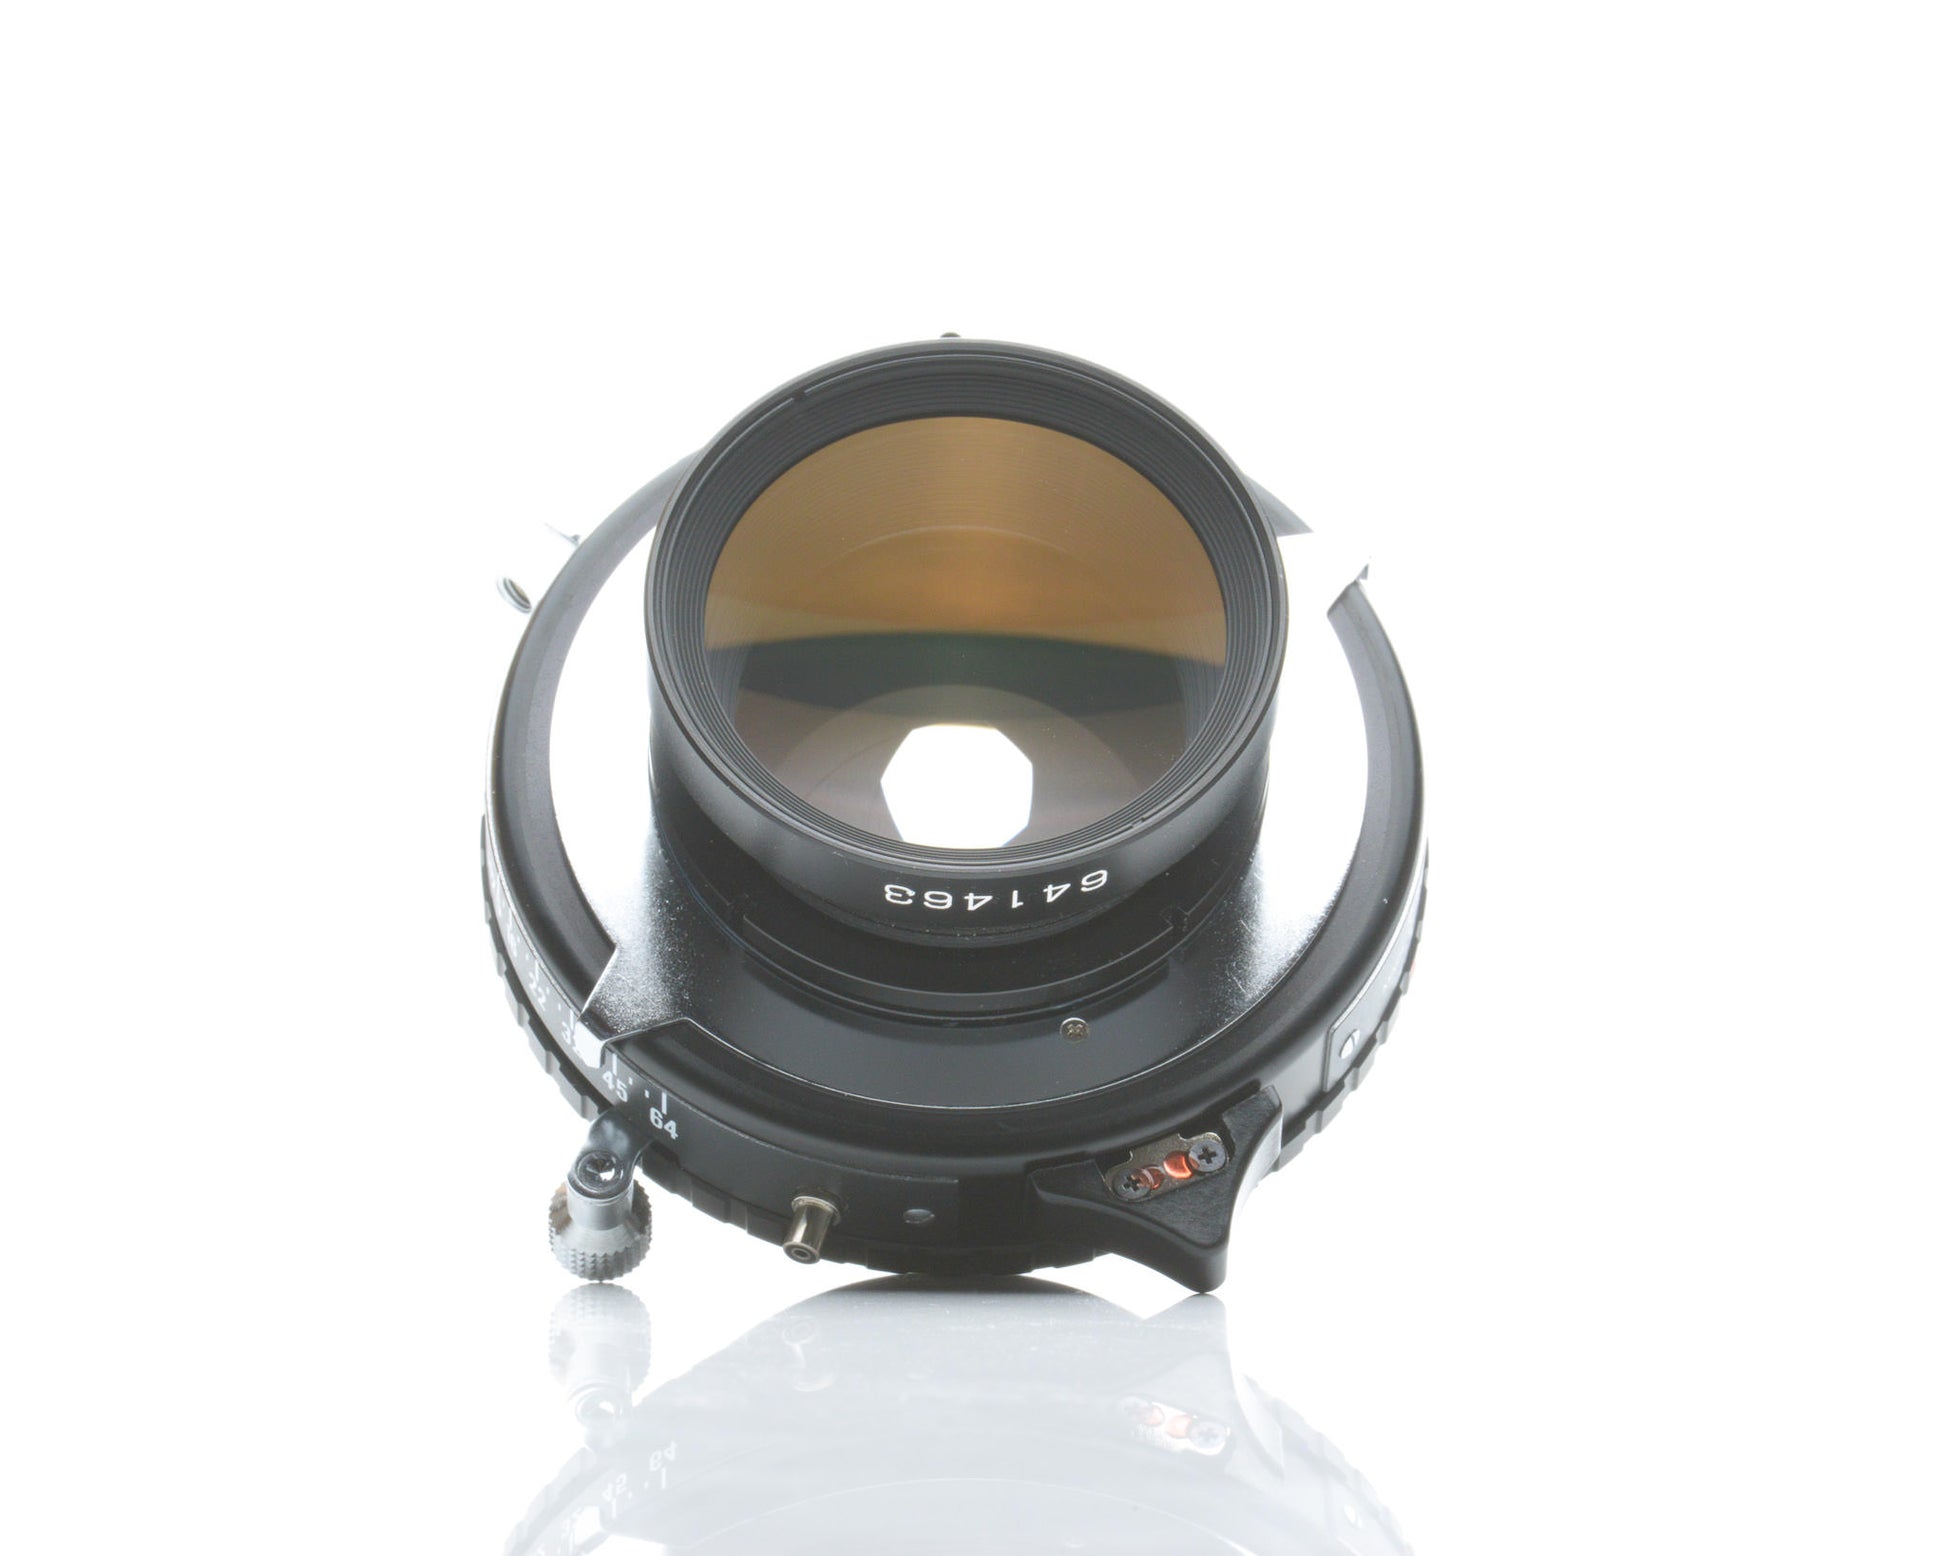 Fuji Fujinon C 450mm F12.5 Lens in Copal 1 Shutter